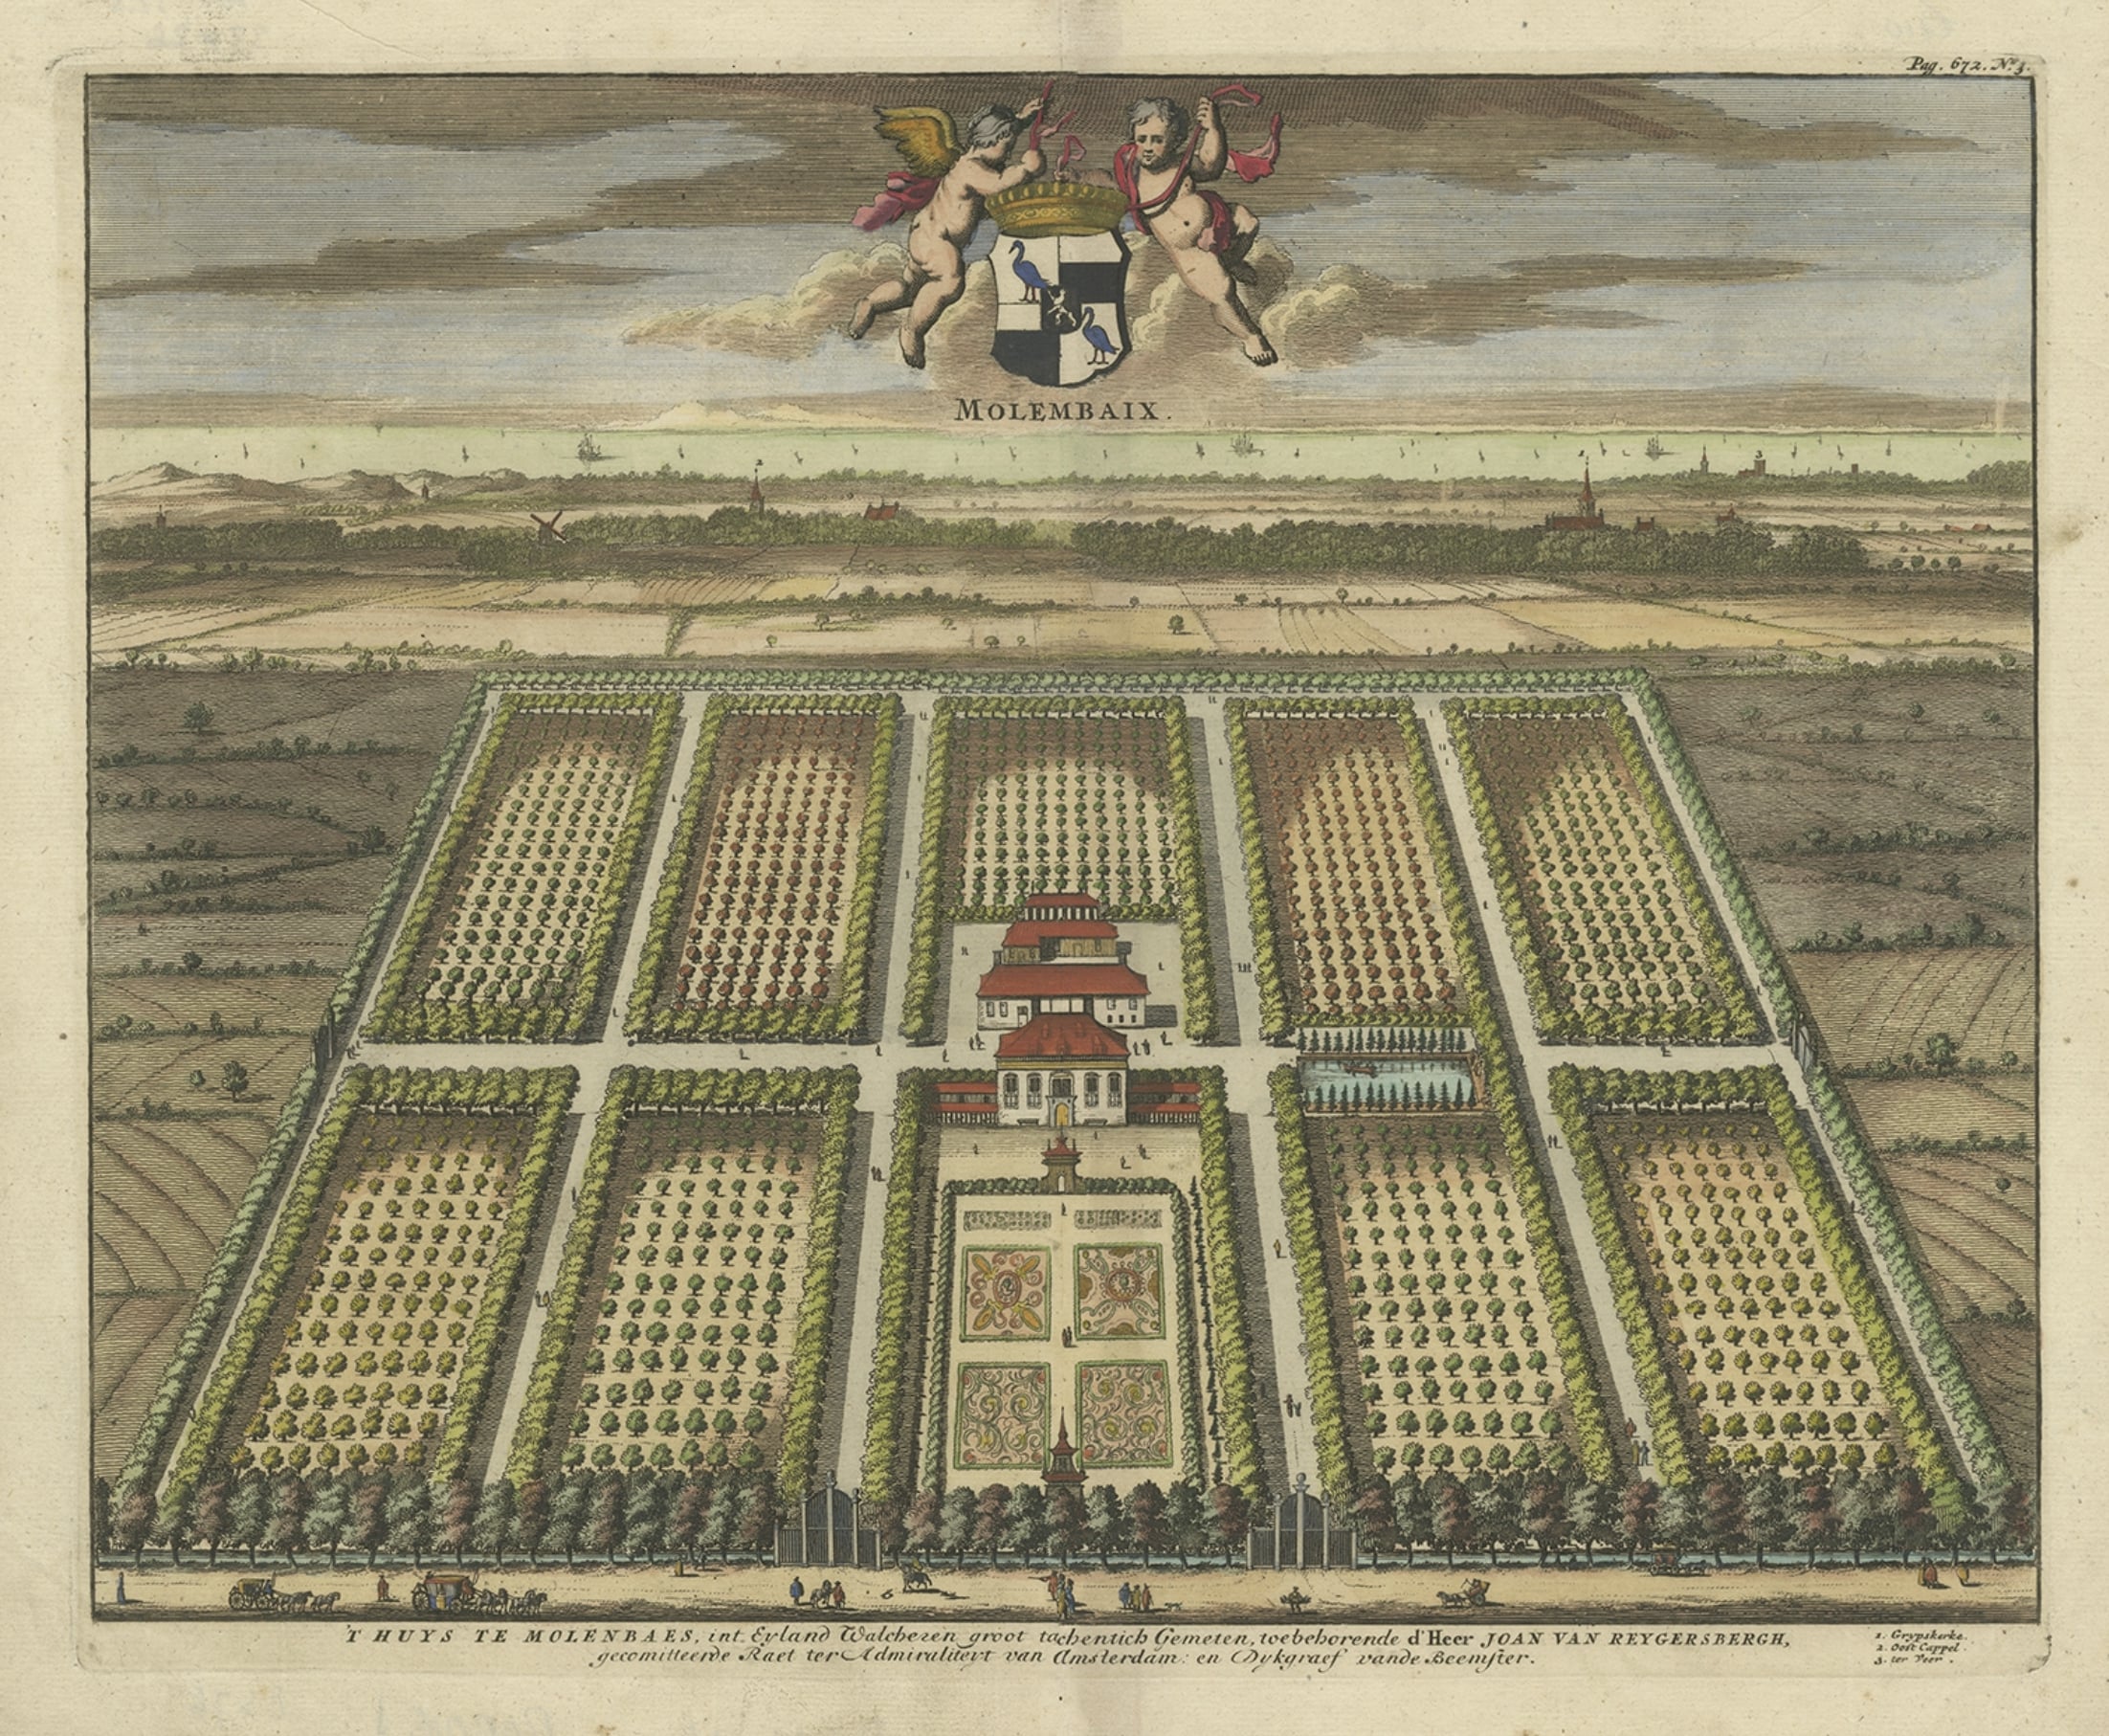 Old Decorative Handcolored Engraving of the Molenbaix Estate in Belgium, 1696